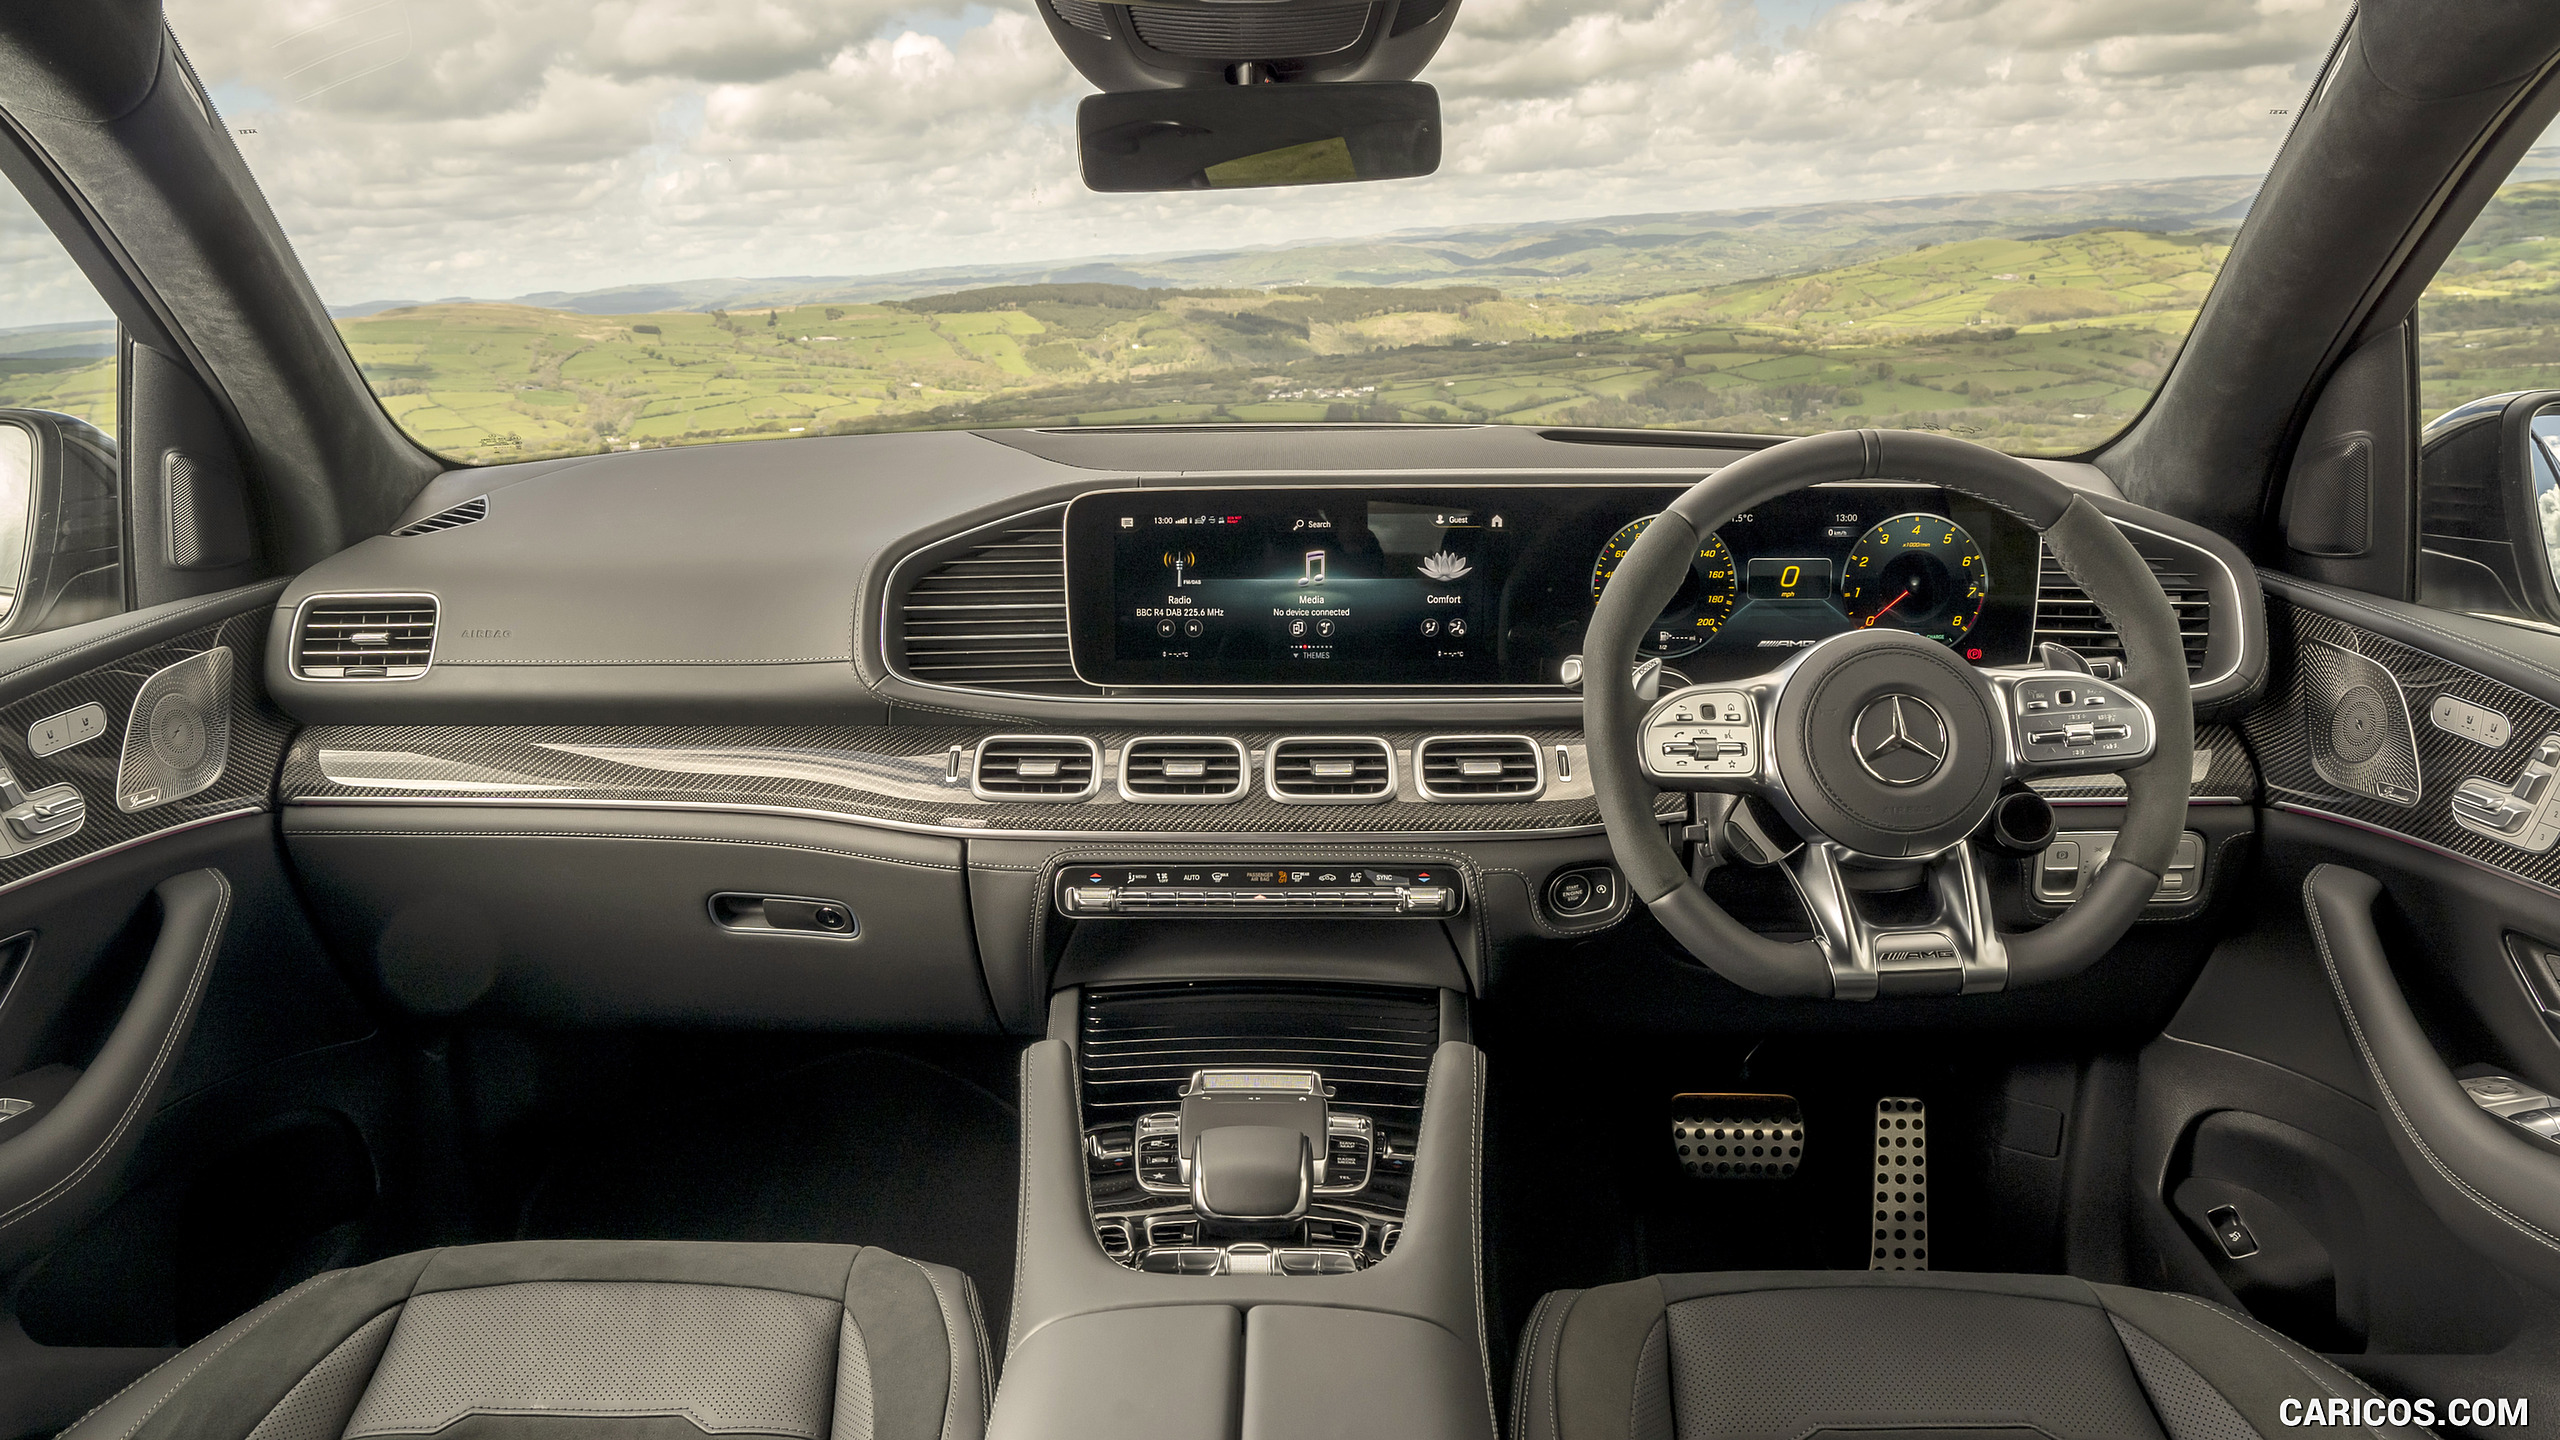 2021 Mercedes-AMG GLE 63 S 4MATIC (UK-Spec) - Interior, Cockpit, #164 of 187